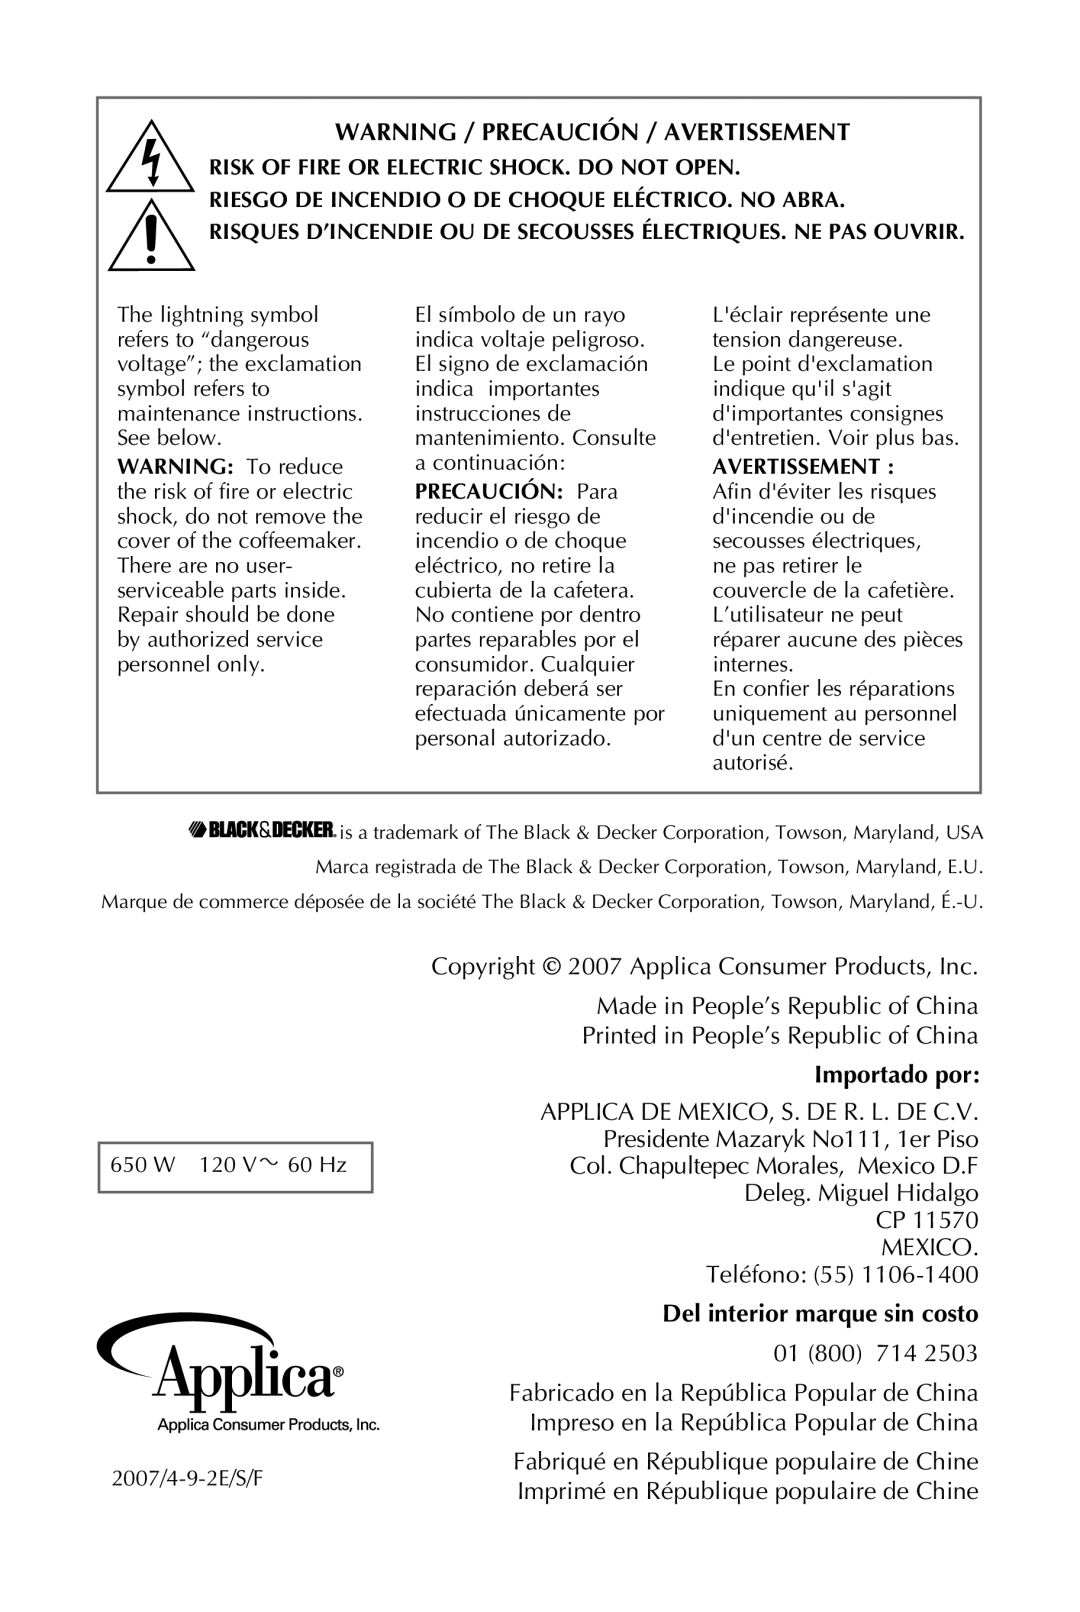 Black & Decker DCM600B Warning / Precaución / Avertissement, Copyright 2007 Applica Consumer Products, Inc, Importado por 